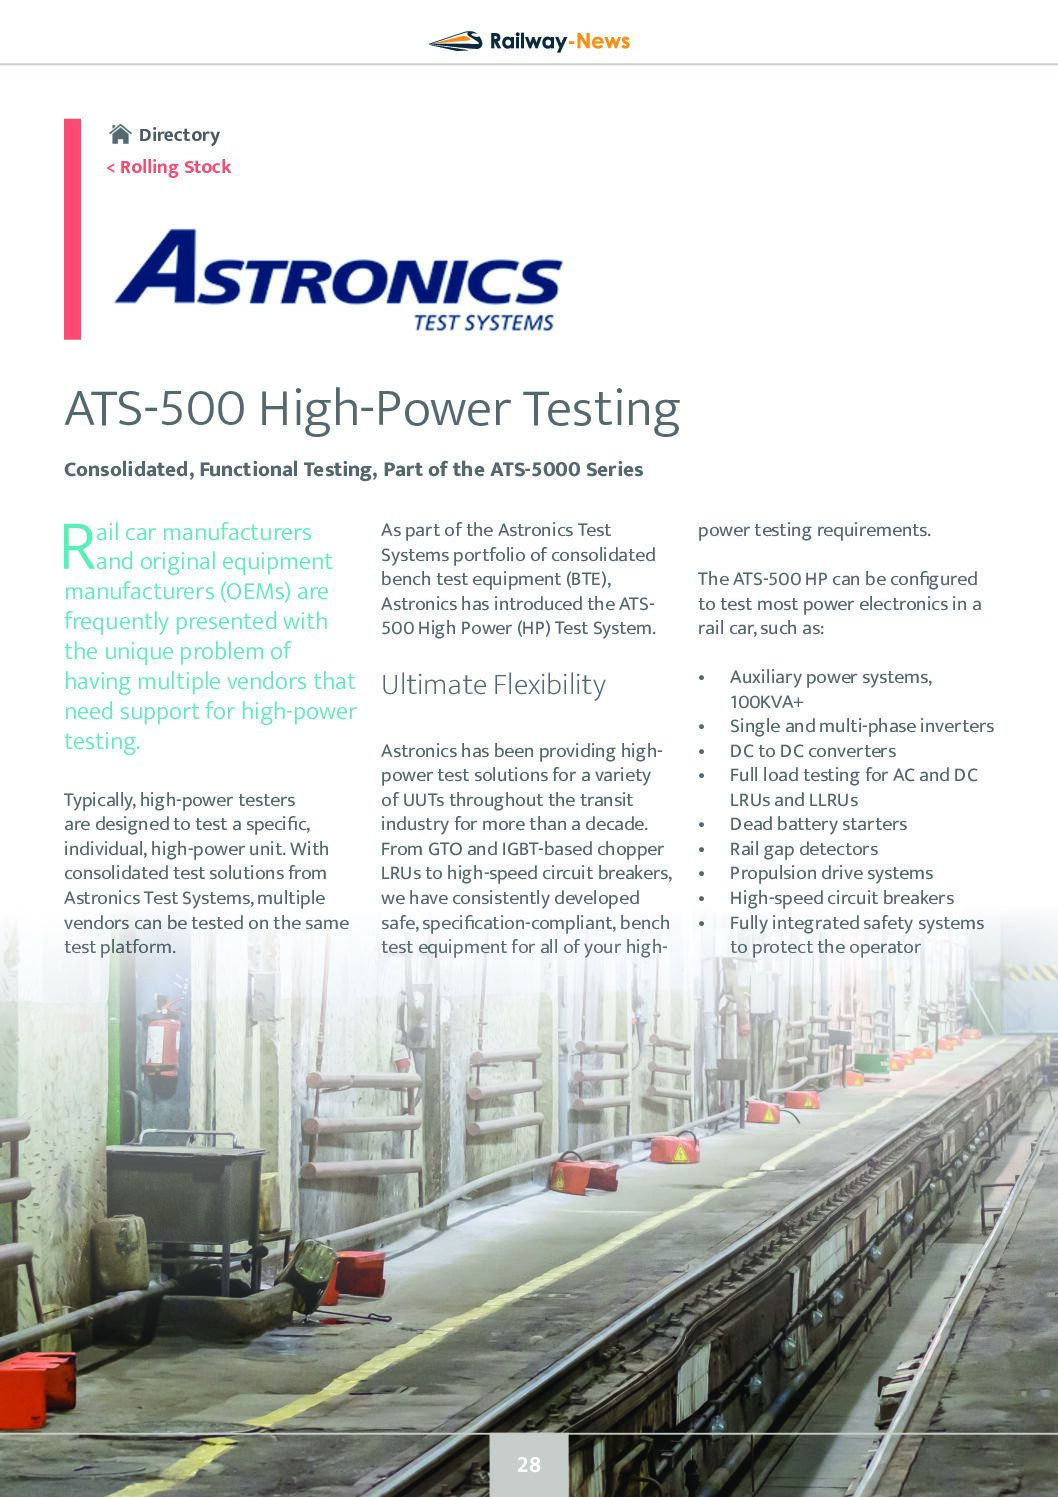 Astronics: ATS-500 High-Power Testing